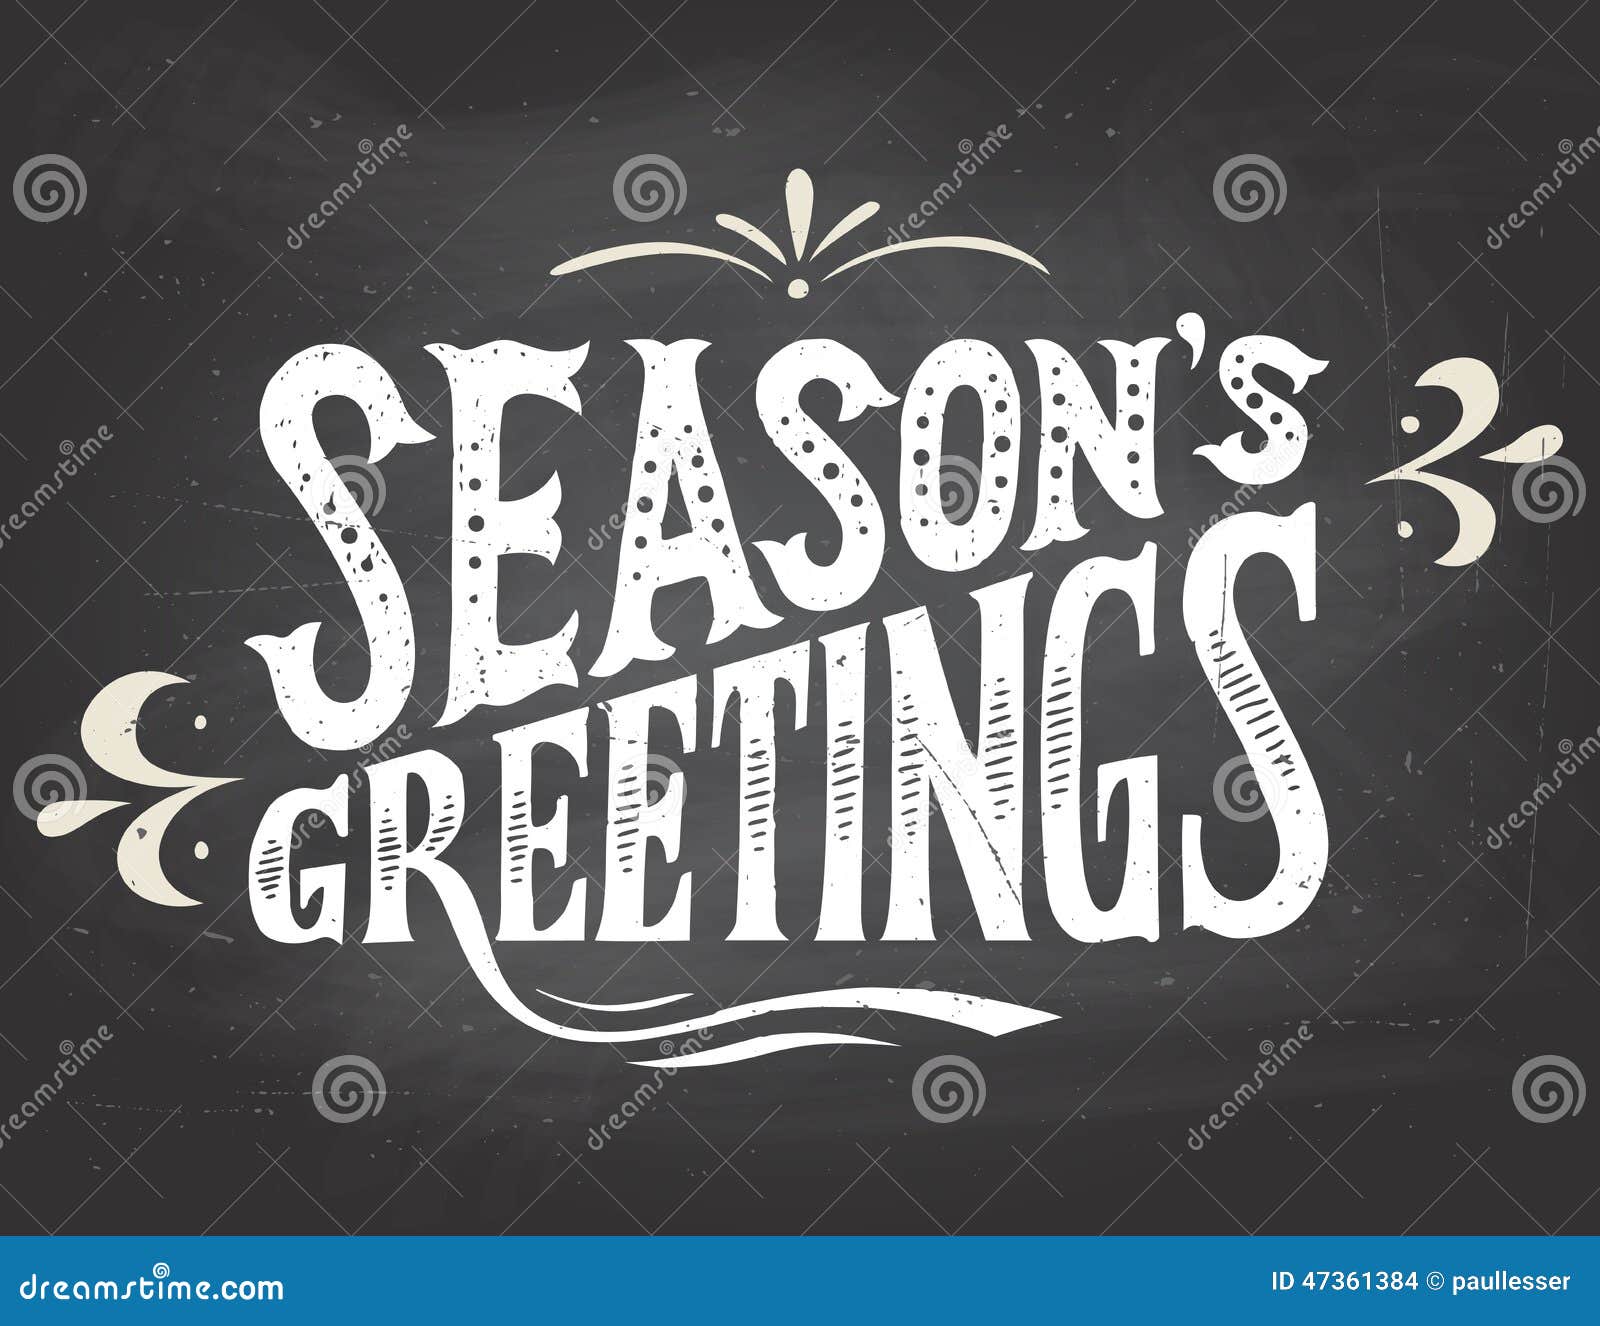 season's greetings on chalkboard background